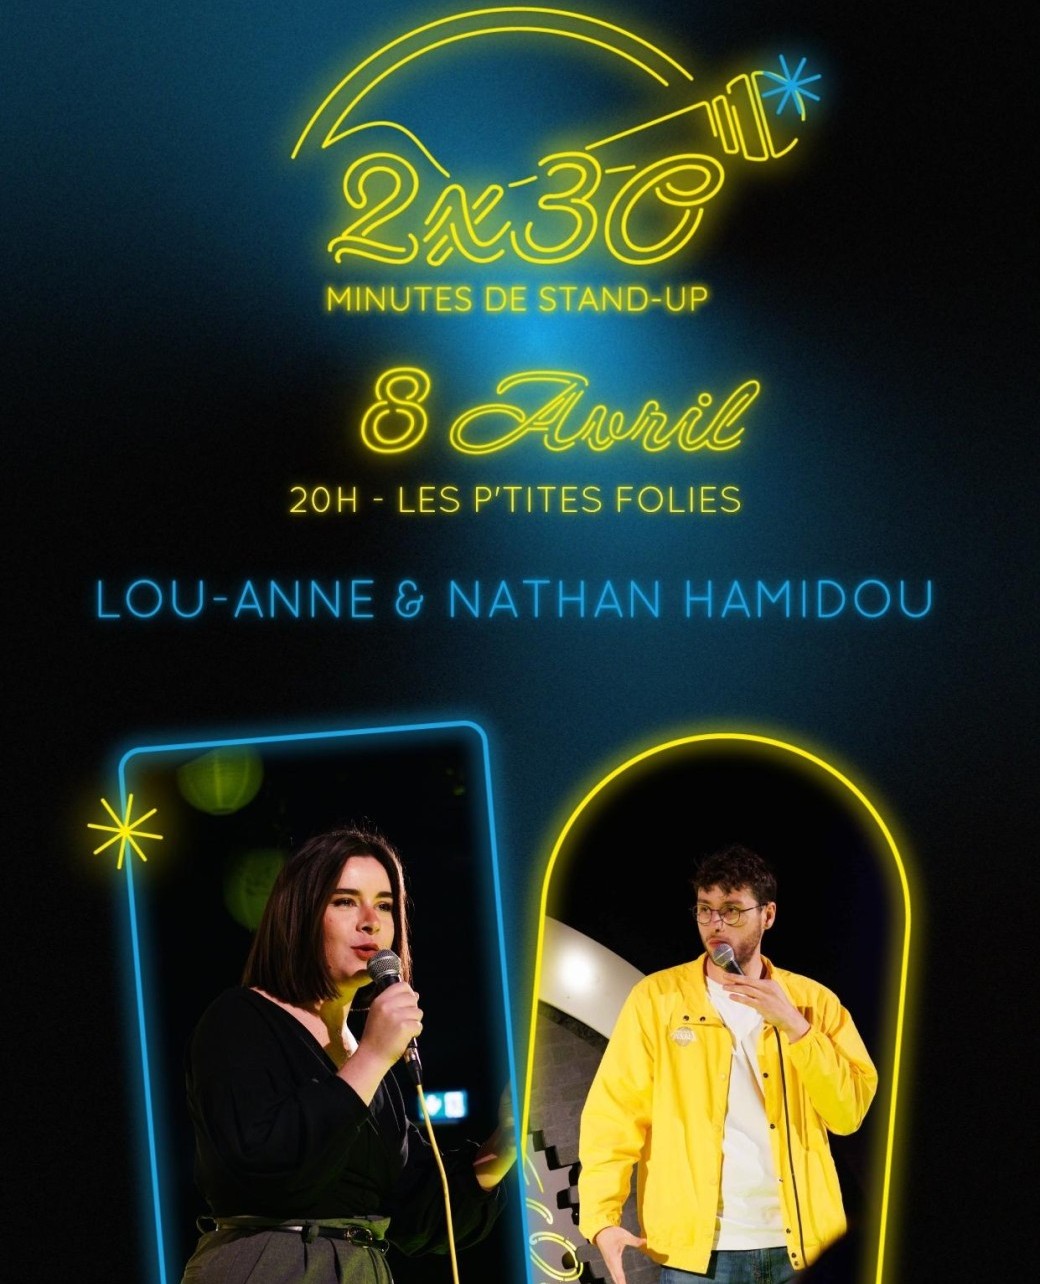 30 minutes chacun - Lou-Anne & Nathan Hamidou